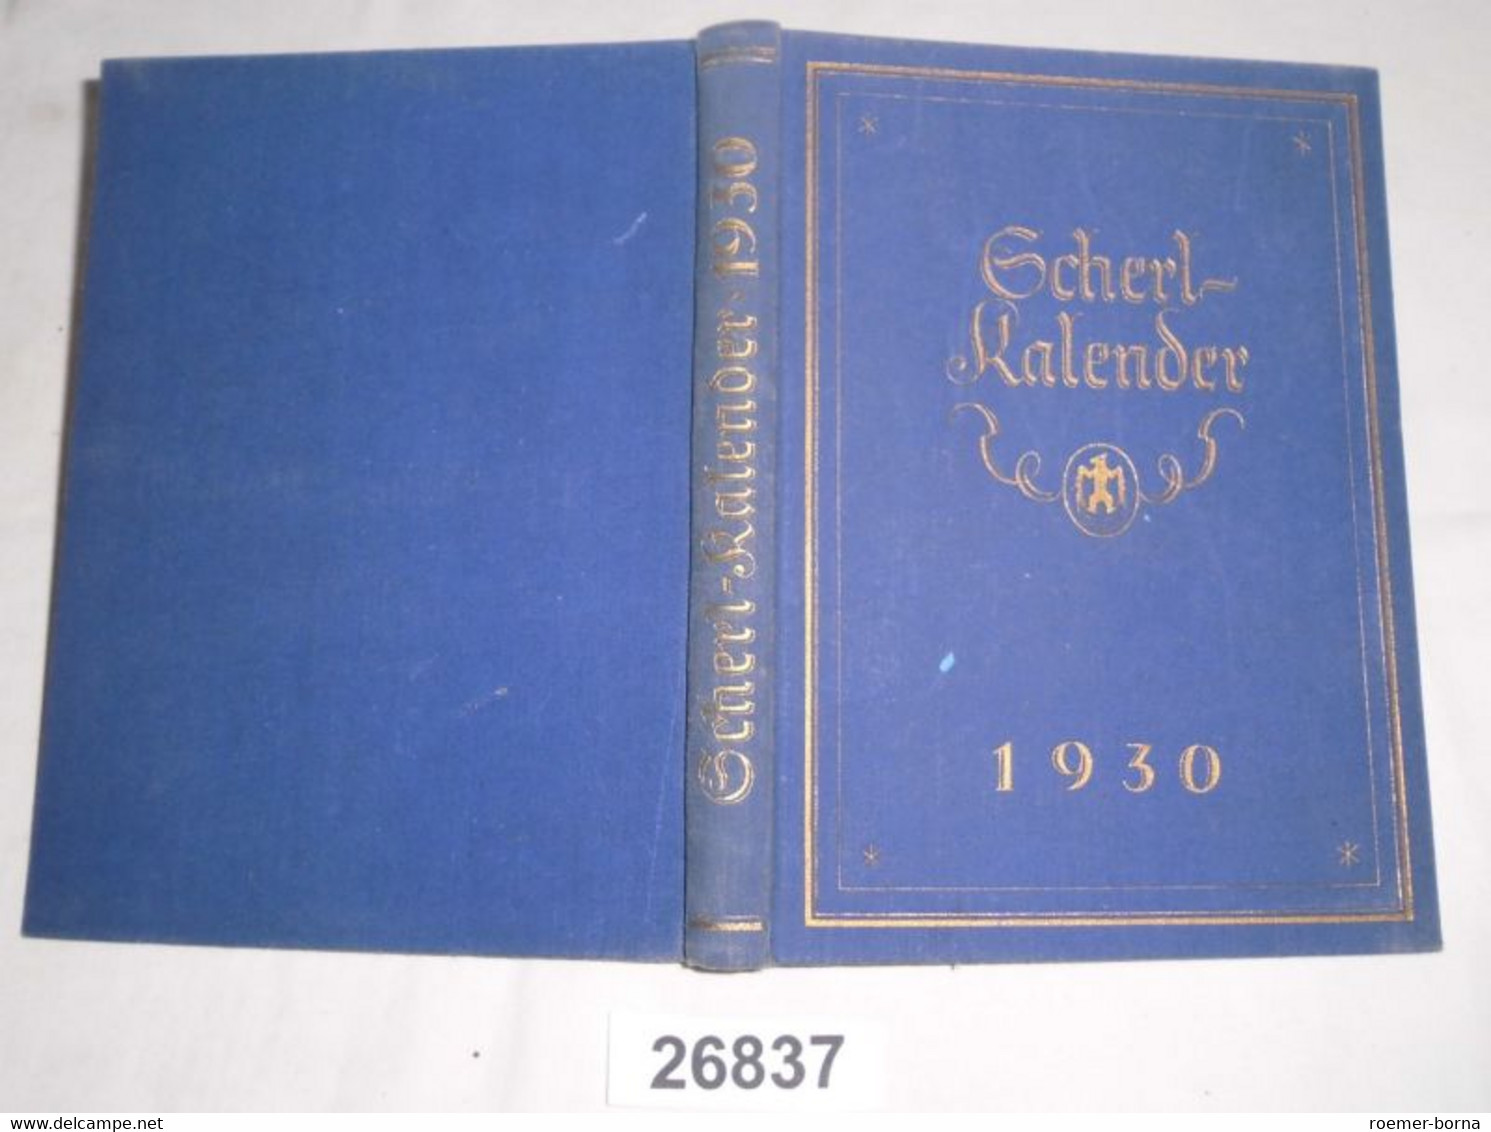 Scherl-Kalender 1930 - Kalender